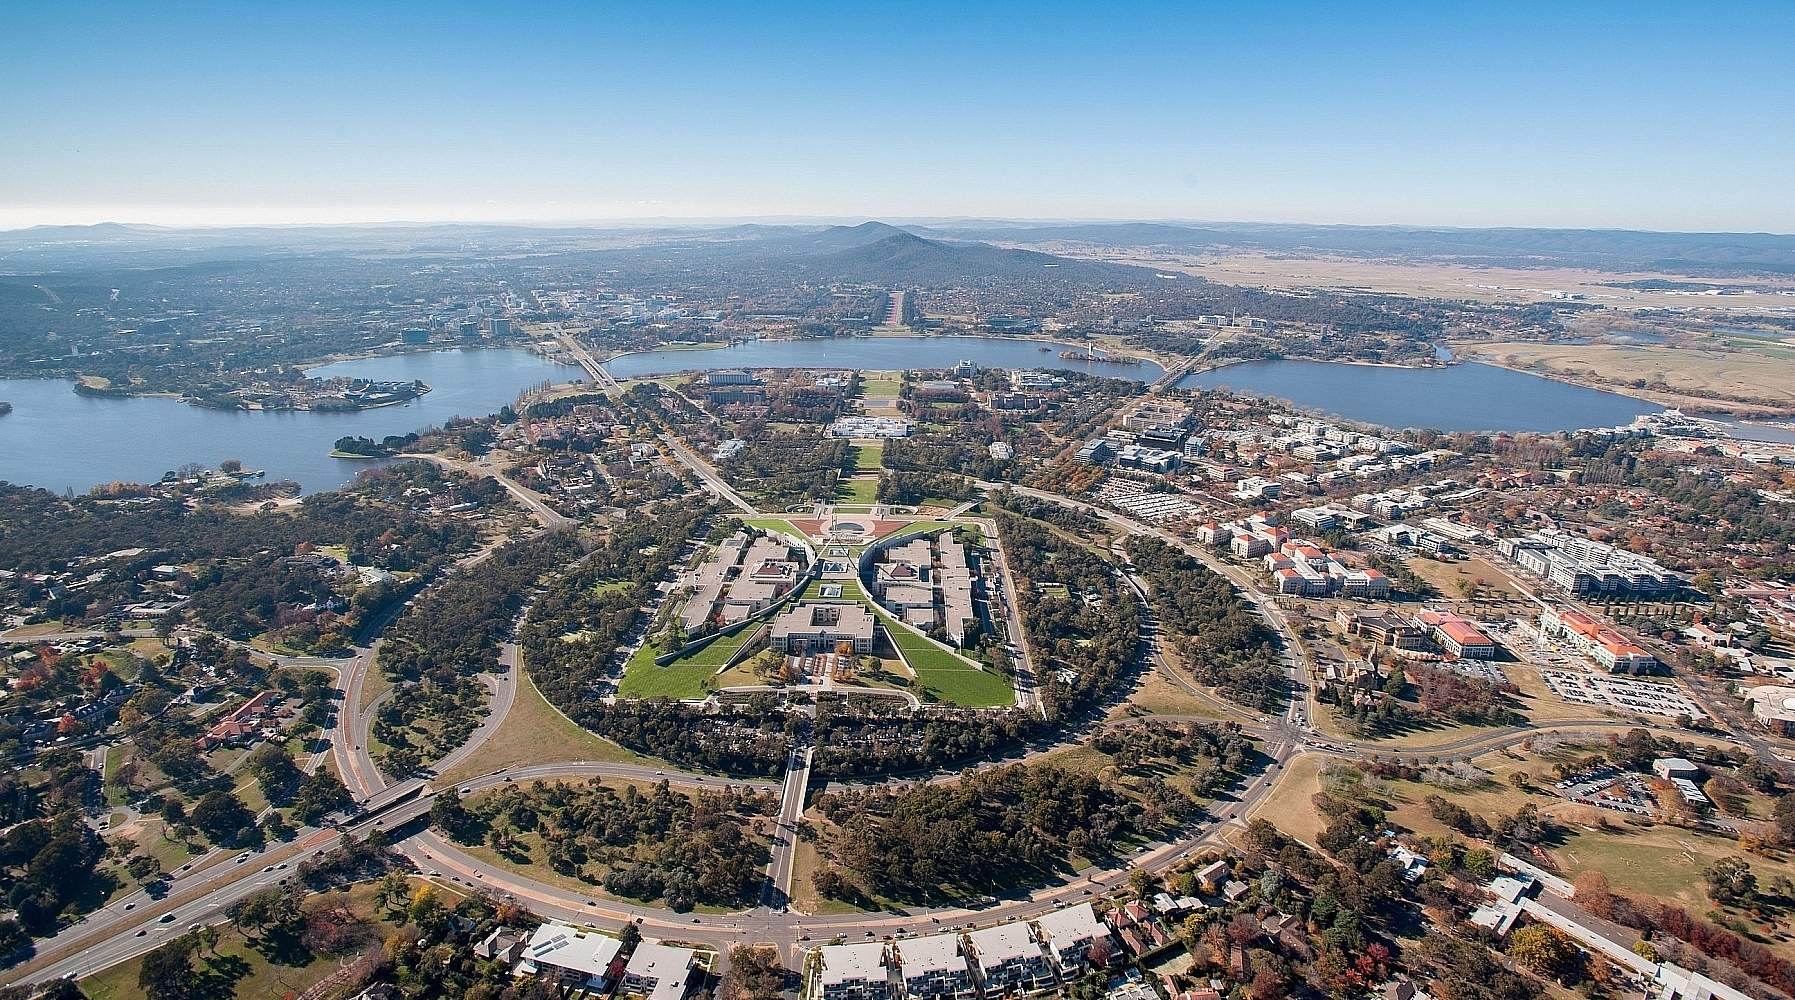 Discover Canberra, Australia's capital city